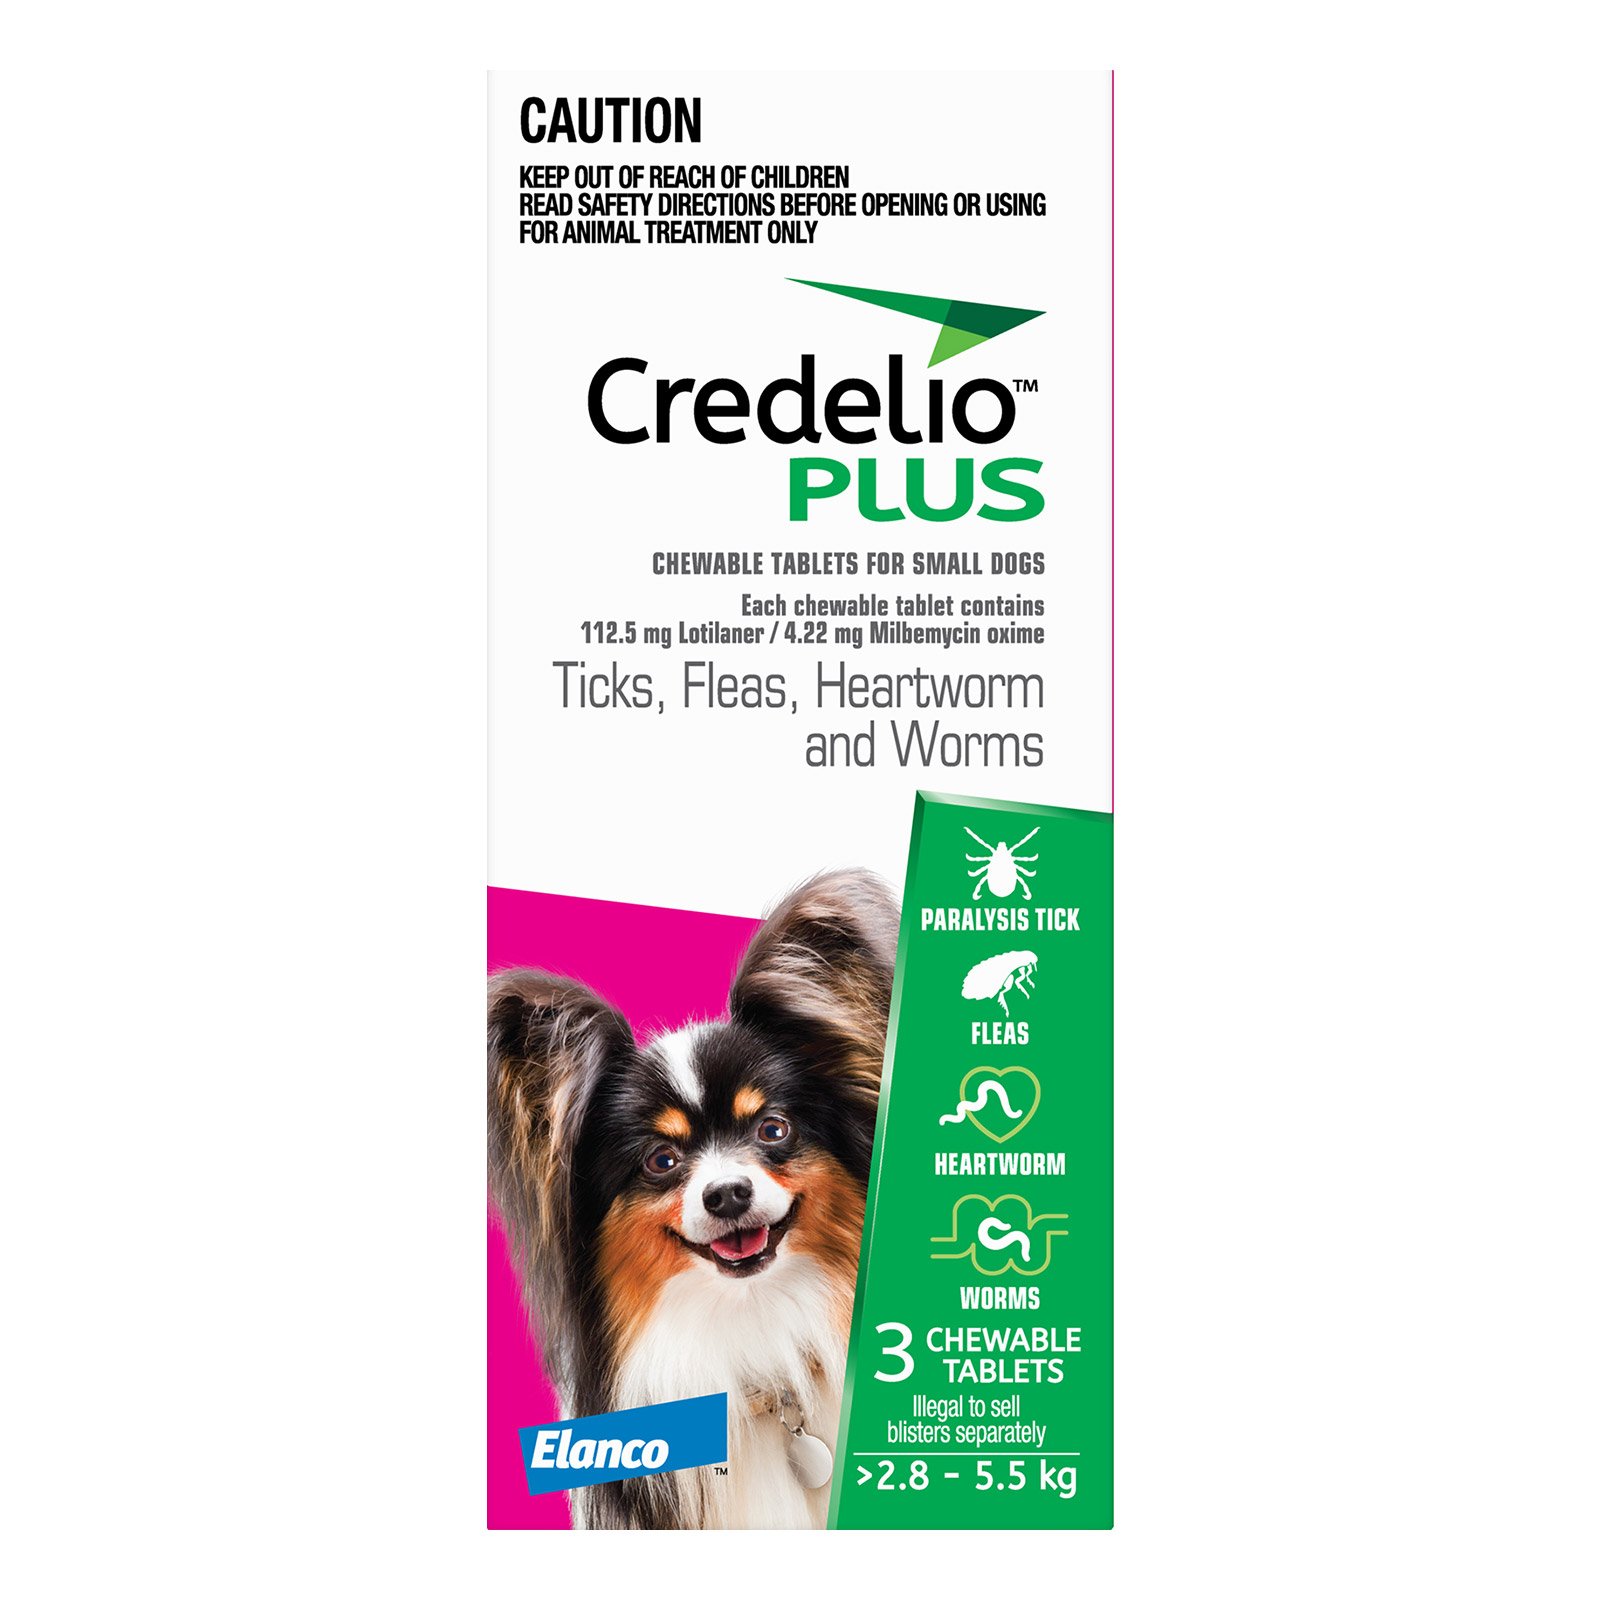 Credelio Plus for Dog Supplies